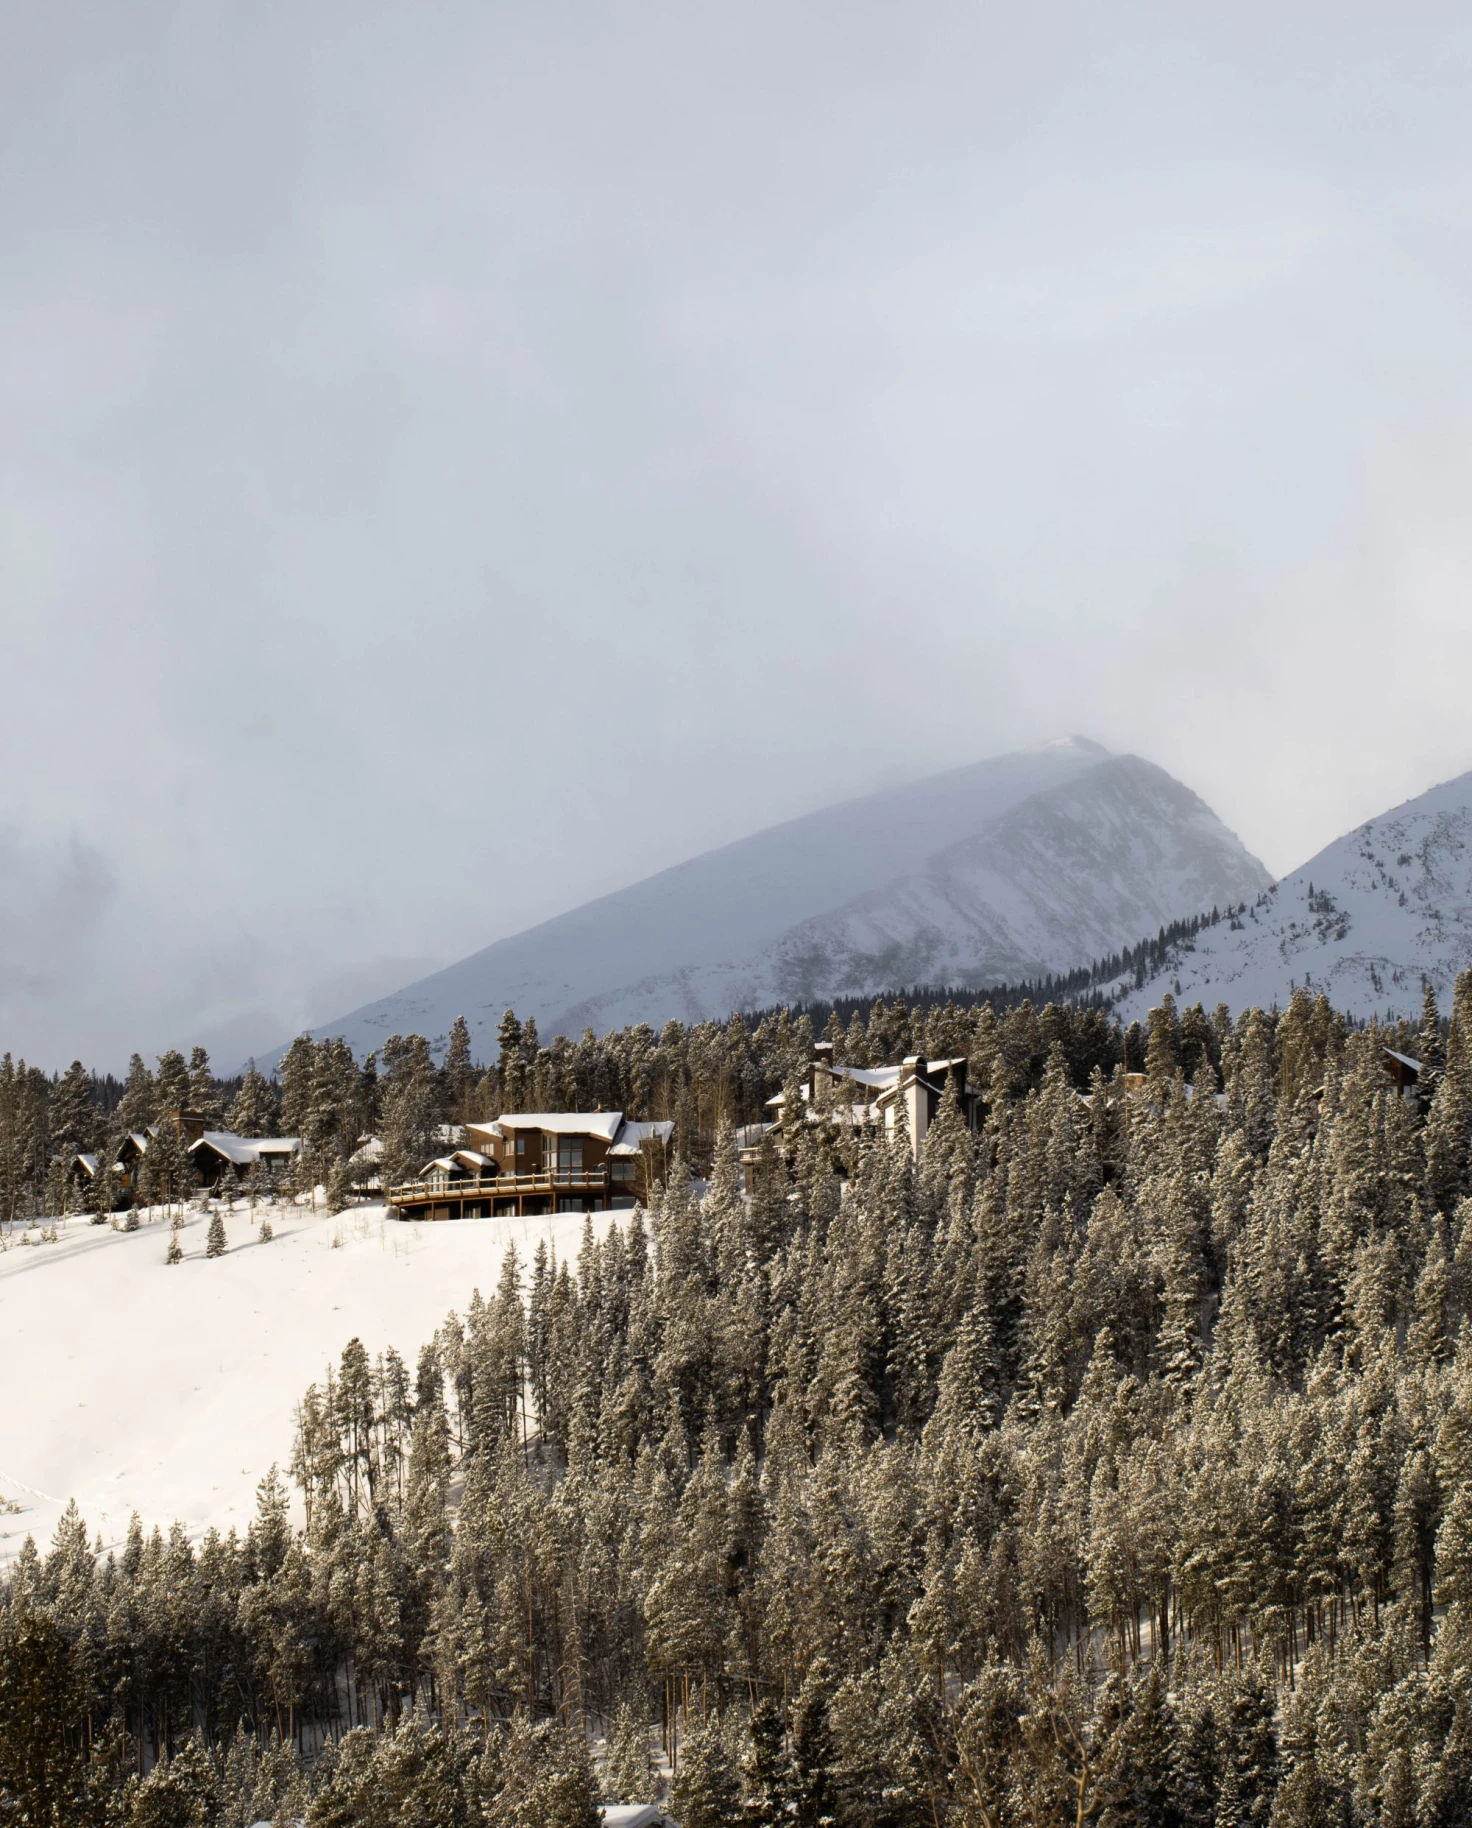 ski lodge in snowy mountain region